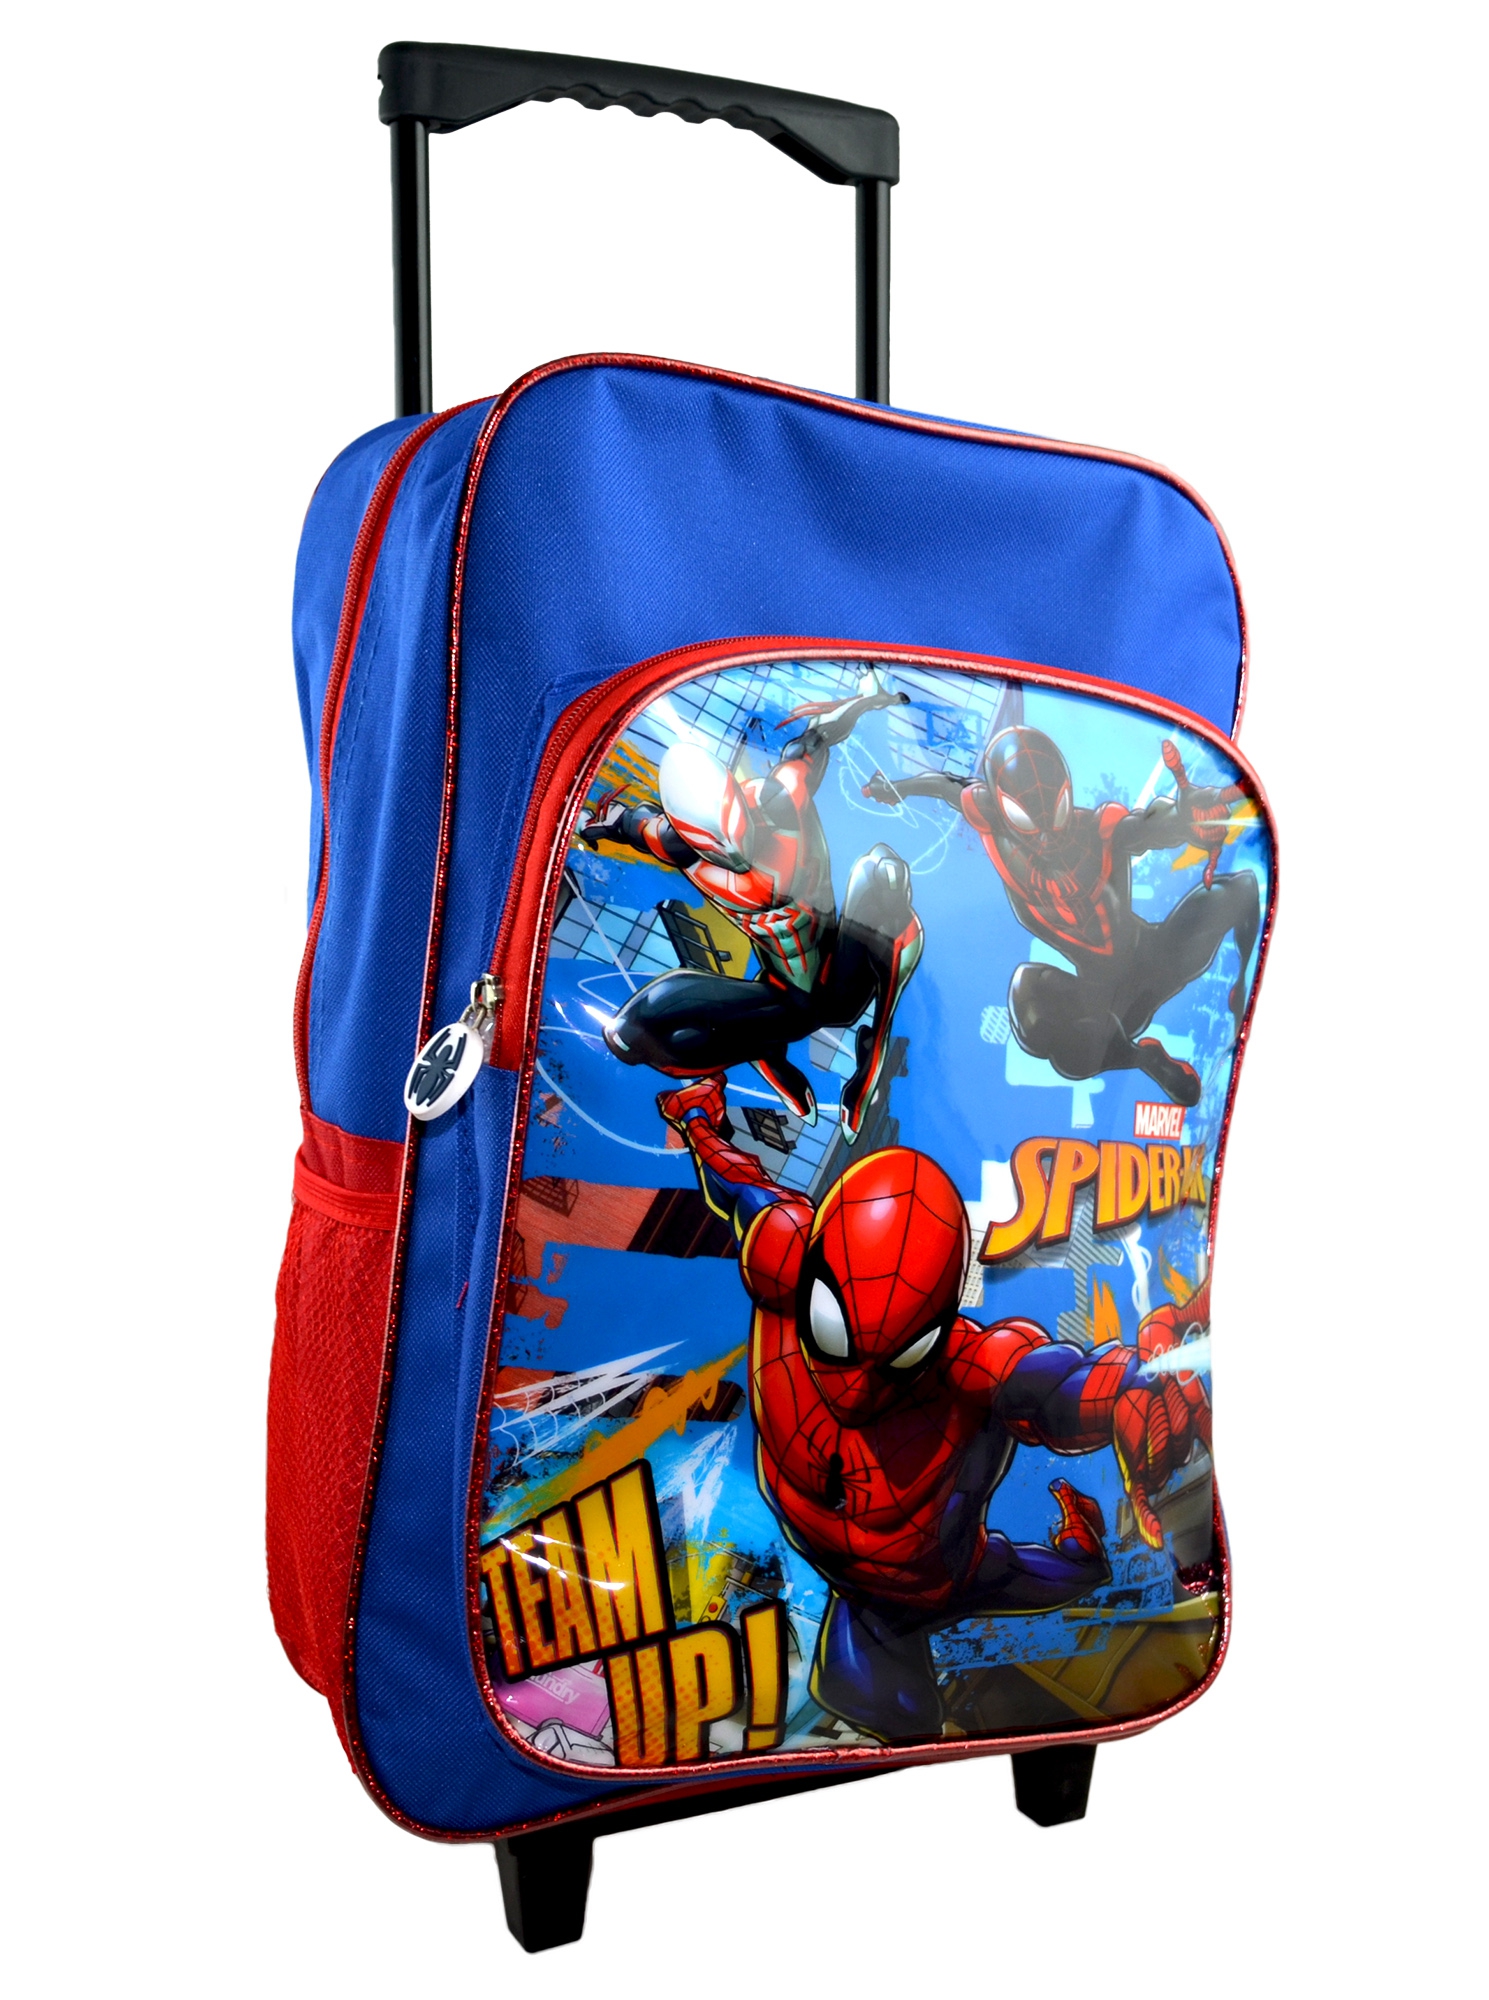 Spiderman 'Team Up' Trolley Backpack School Travel Roller Wheeled Bag